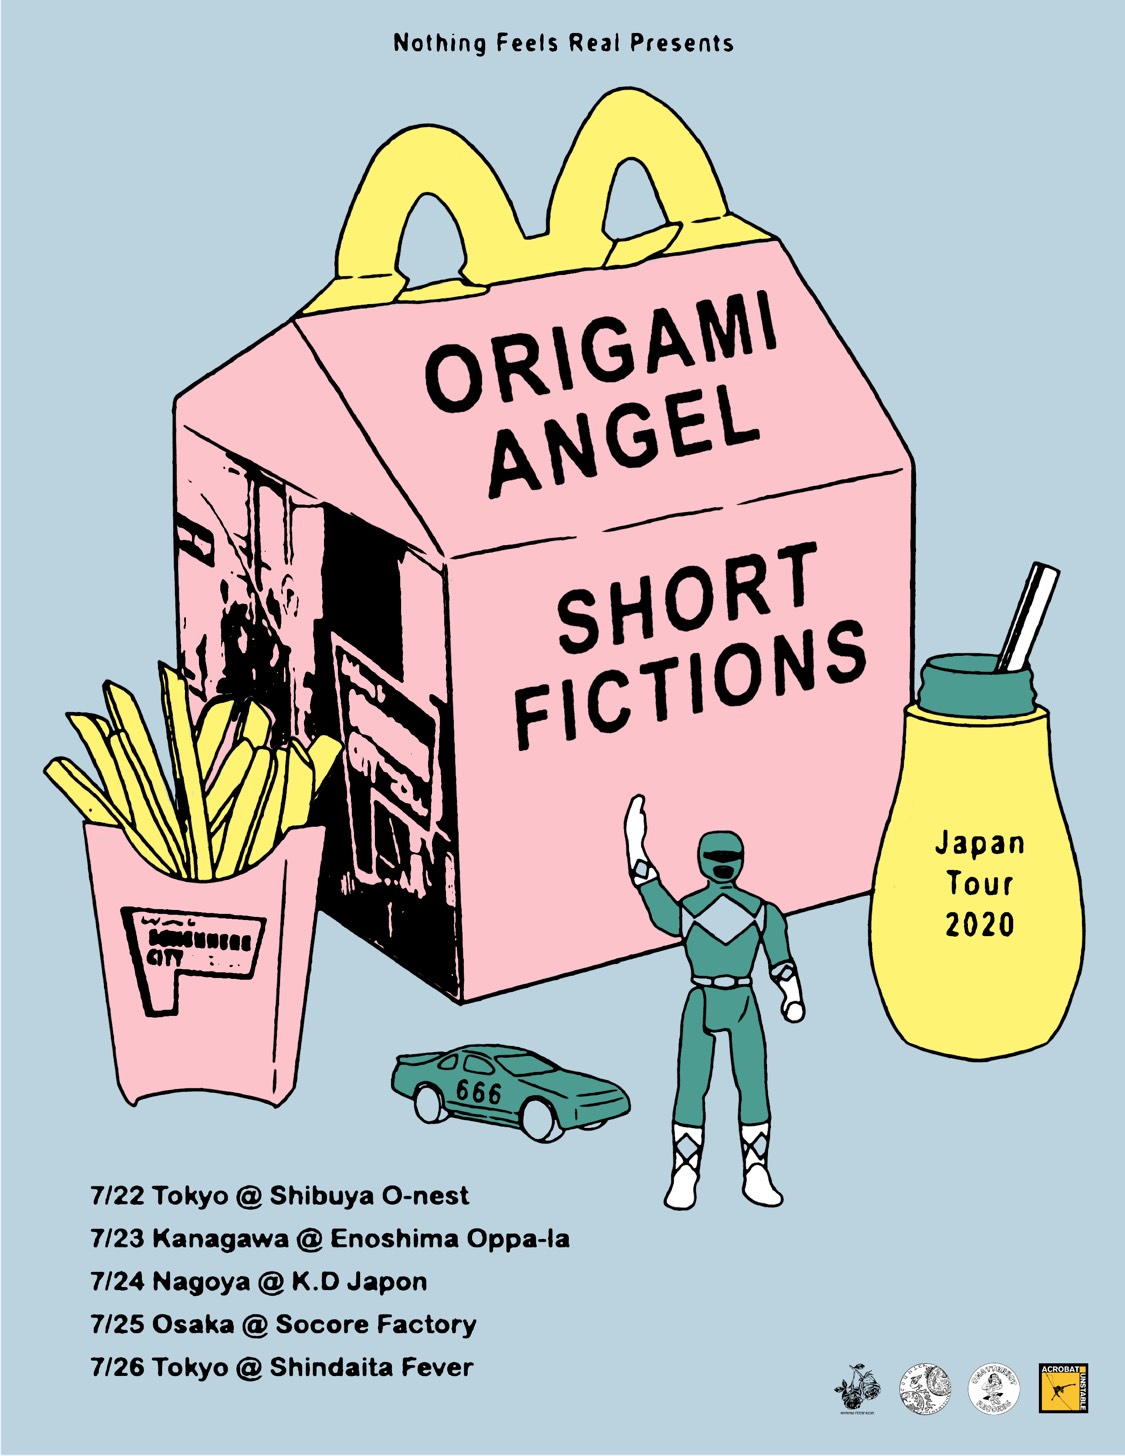 Origami Angel Short Fictions Japan Tour 2020" in Osaka SOCORE